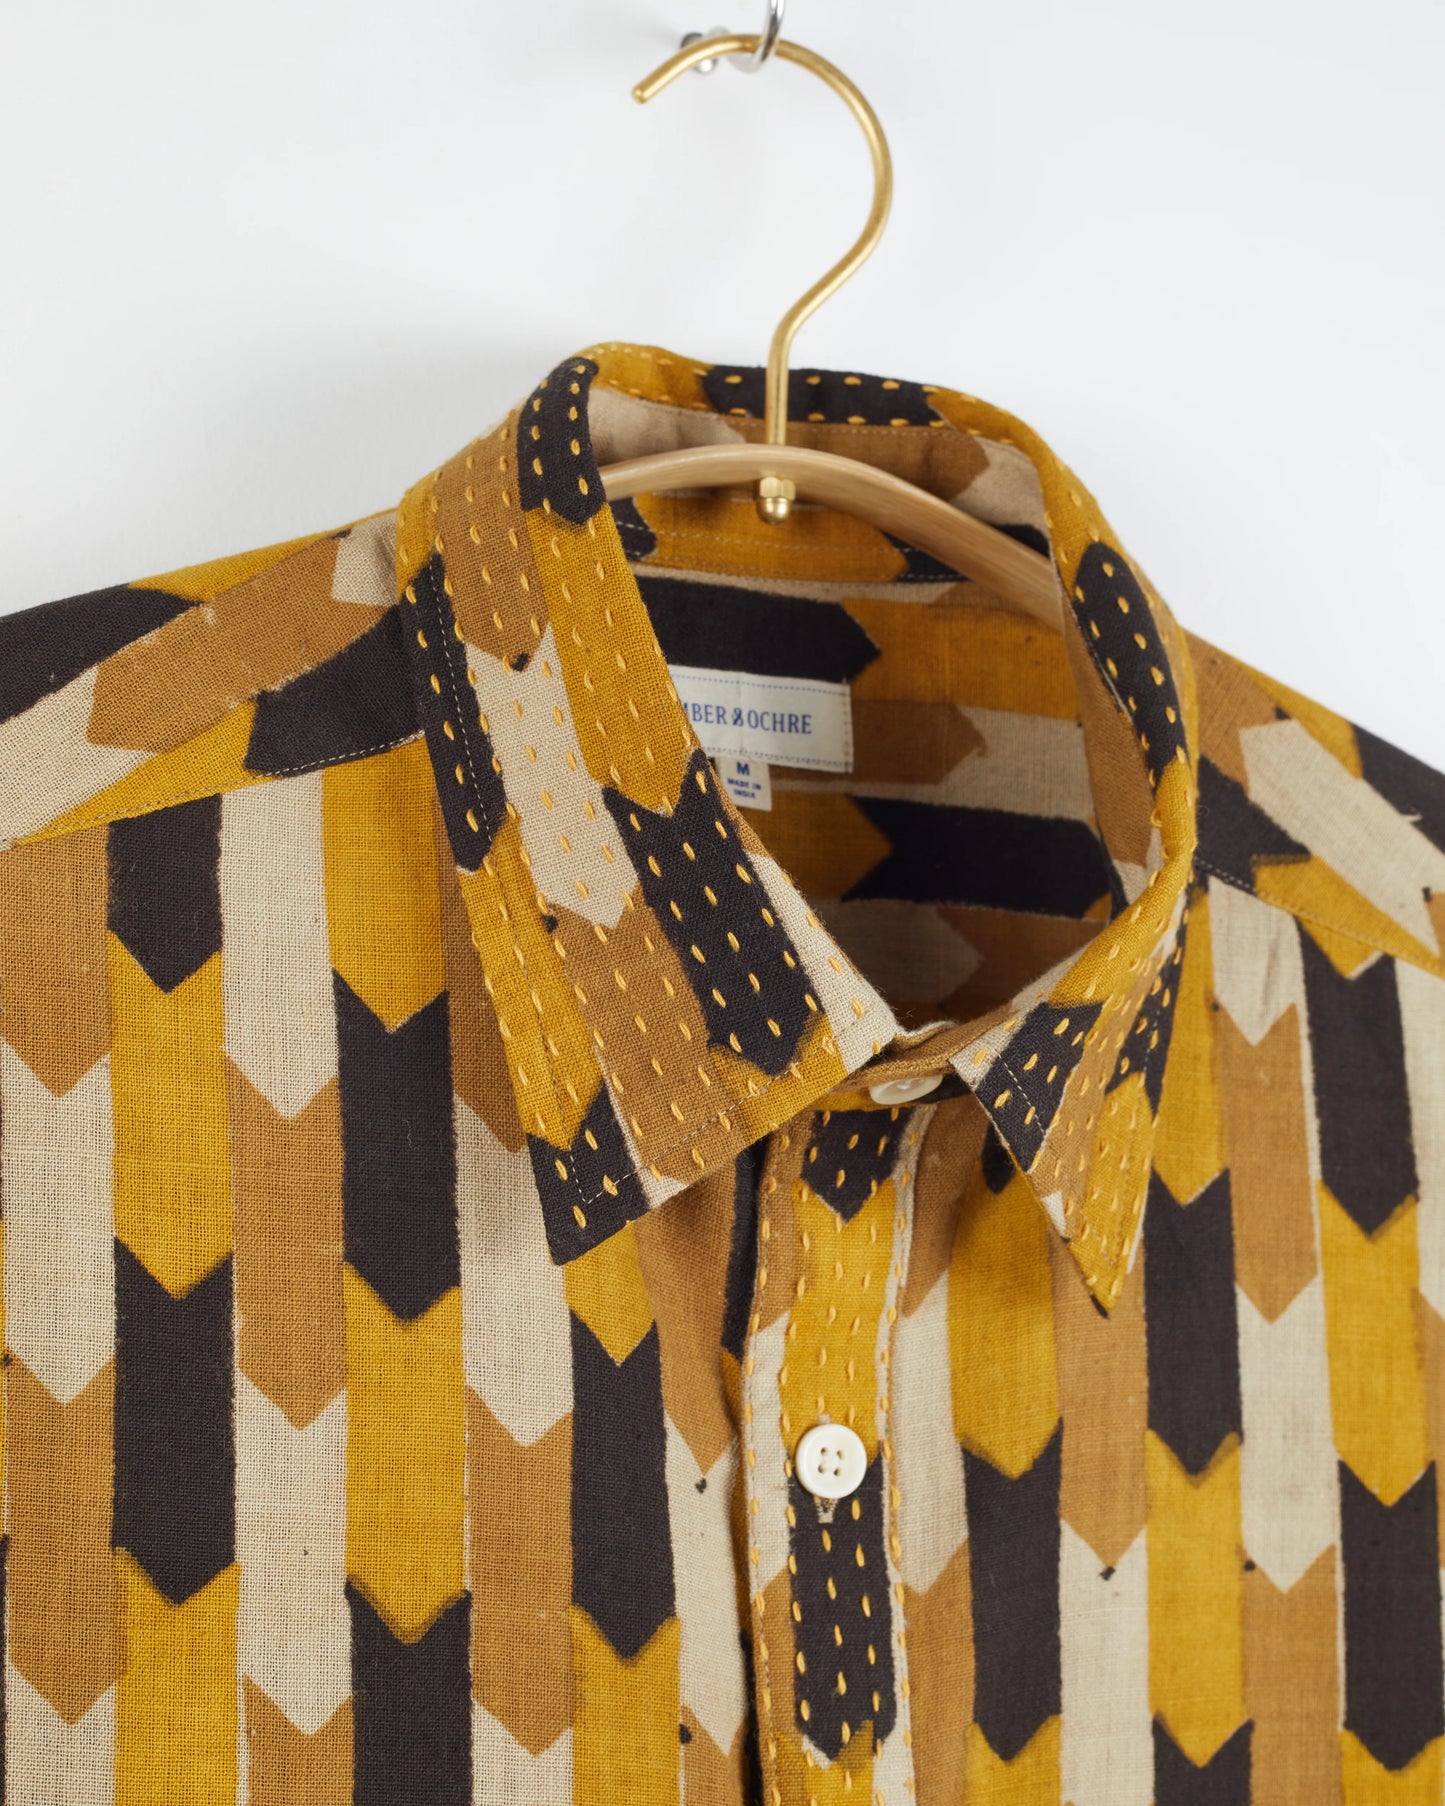 Umber & Ochre S/S Kabir Shirt w/Saddle Stitch